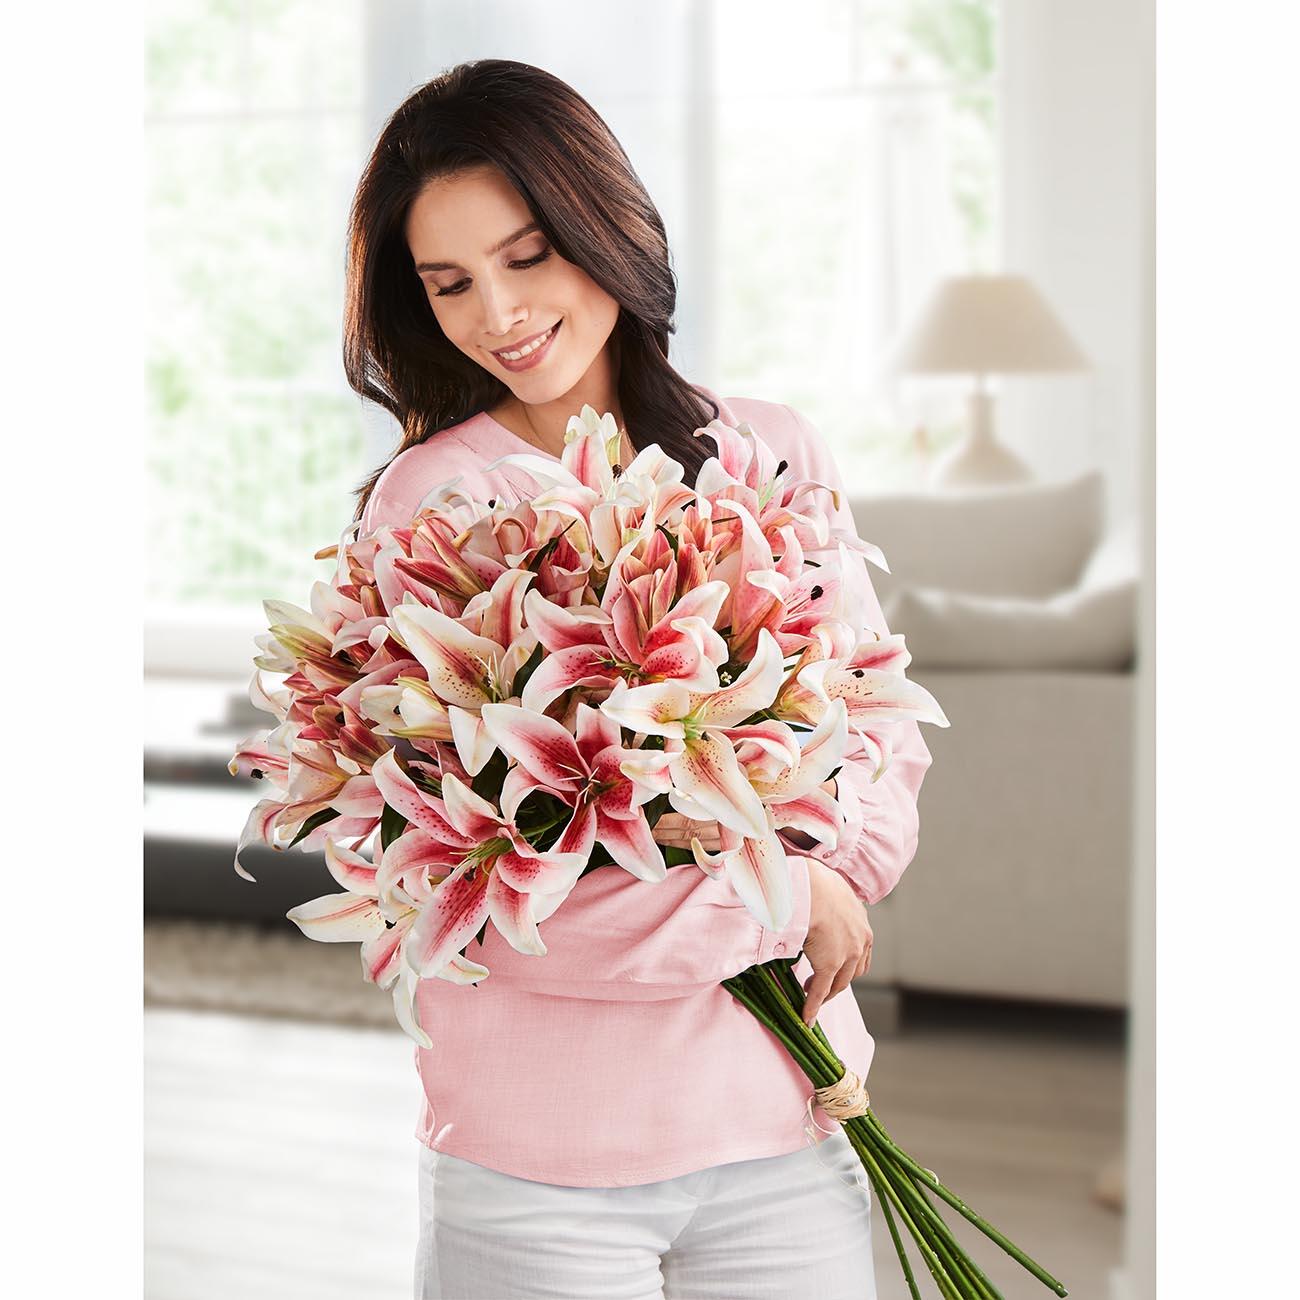 Kunstblumen-Bouquet St., online kaufen 12 rosé Lilien,